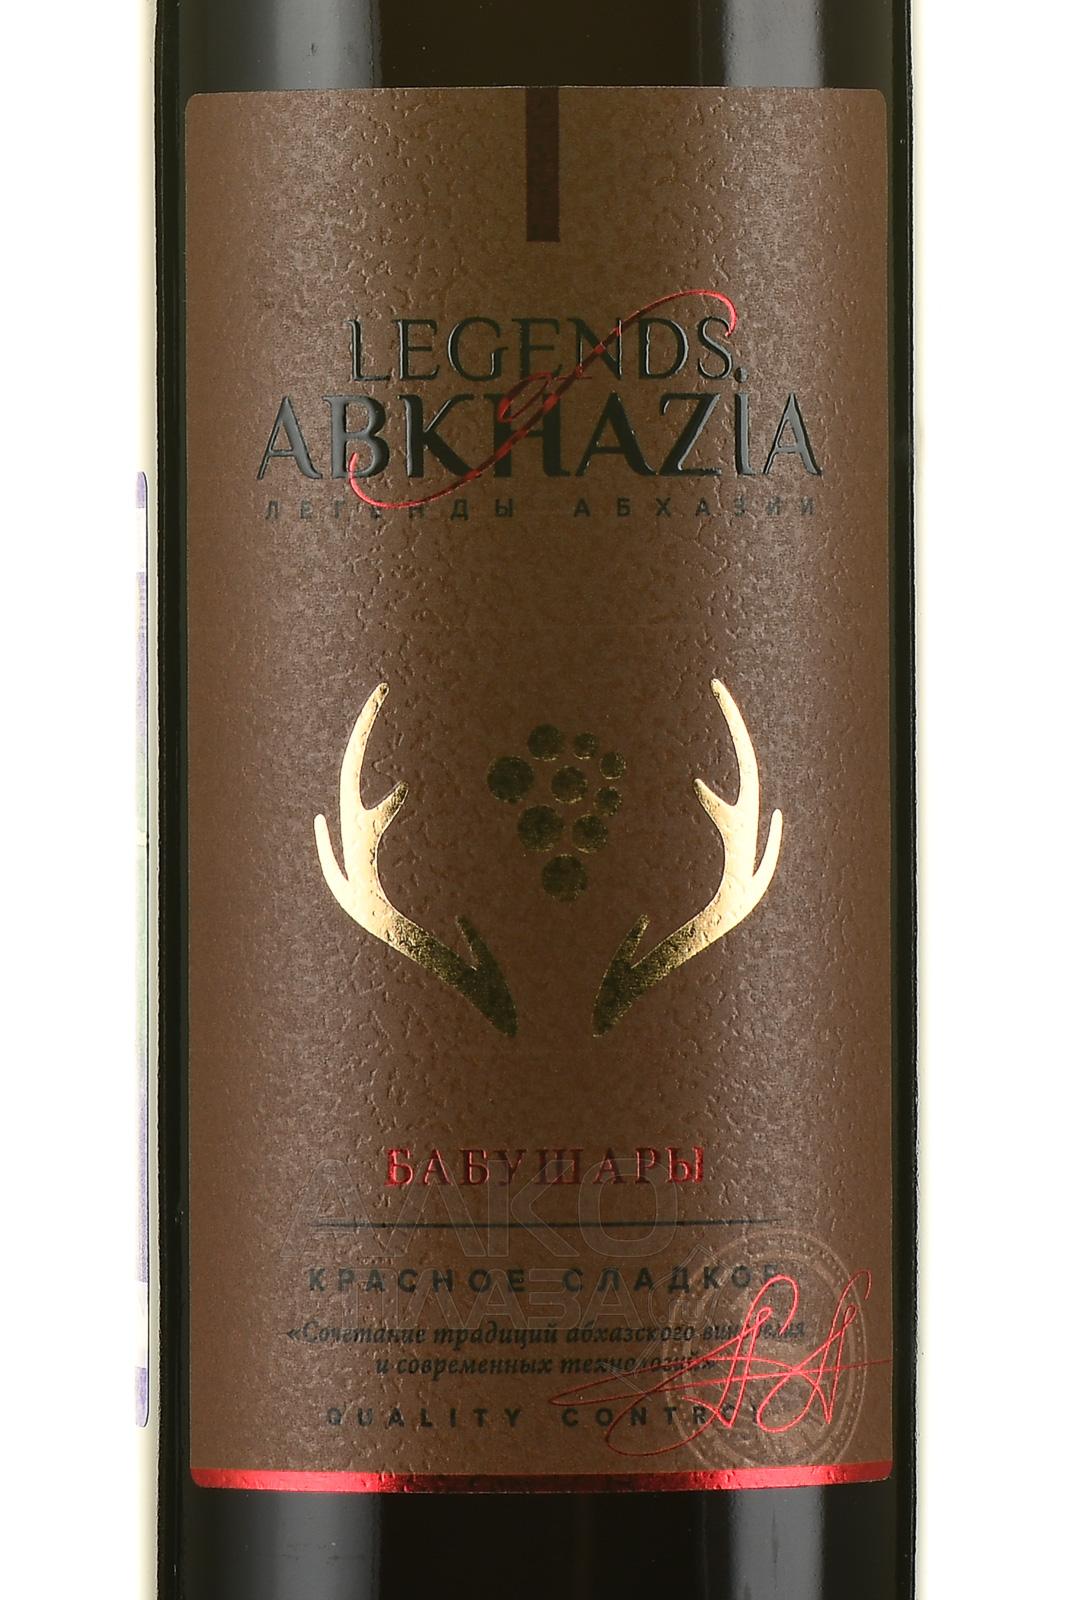 Легендарные вина. Вино Бабушары Абхазия. Вино легенды Абхазии 0.75. Legends abhazia вино. Шато Абхаз вино линейка Абхазия.